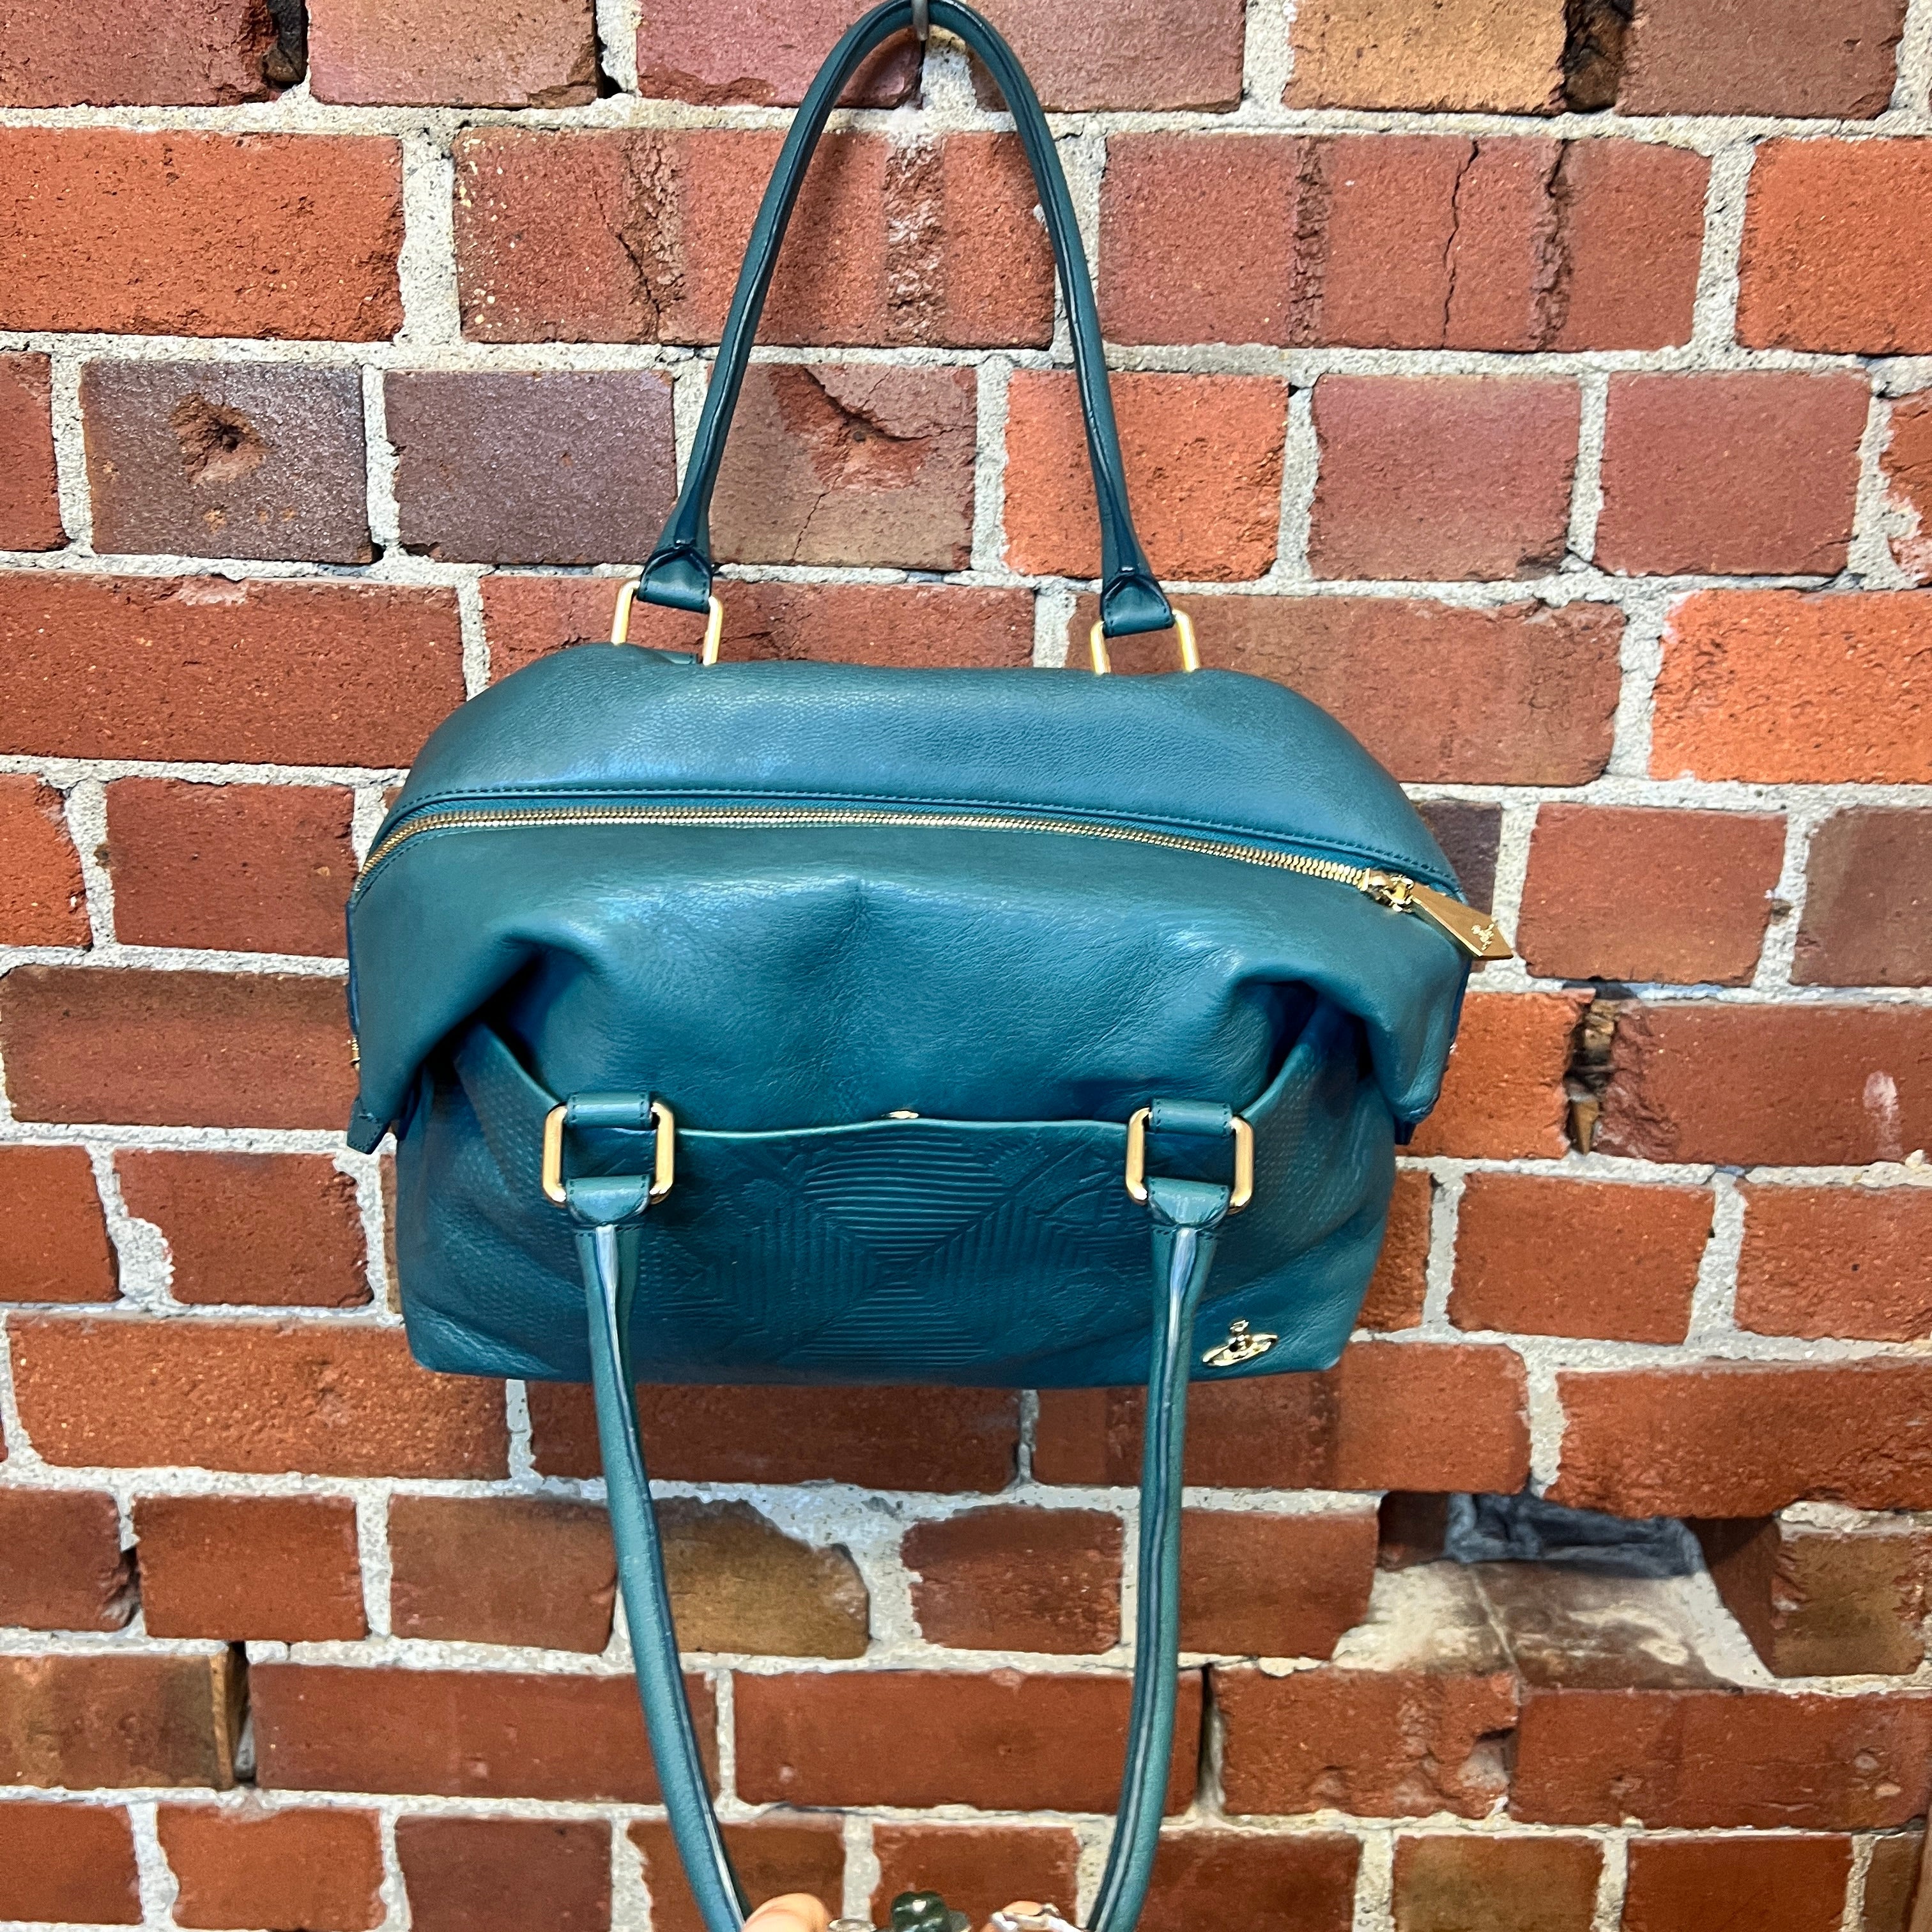 VIVIENNE WESTWOOD Leather handbag